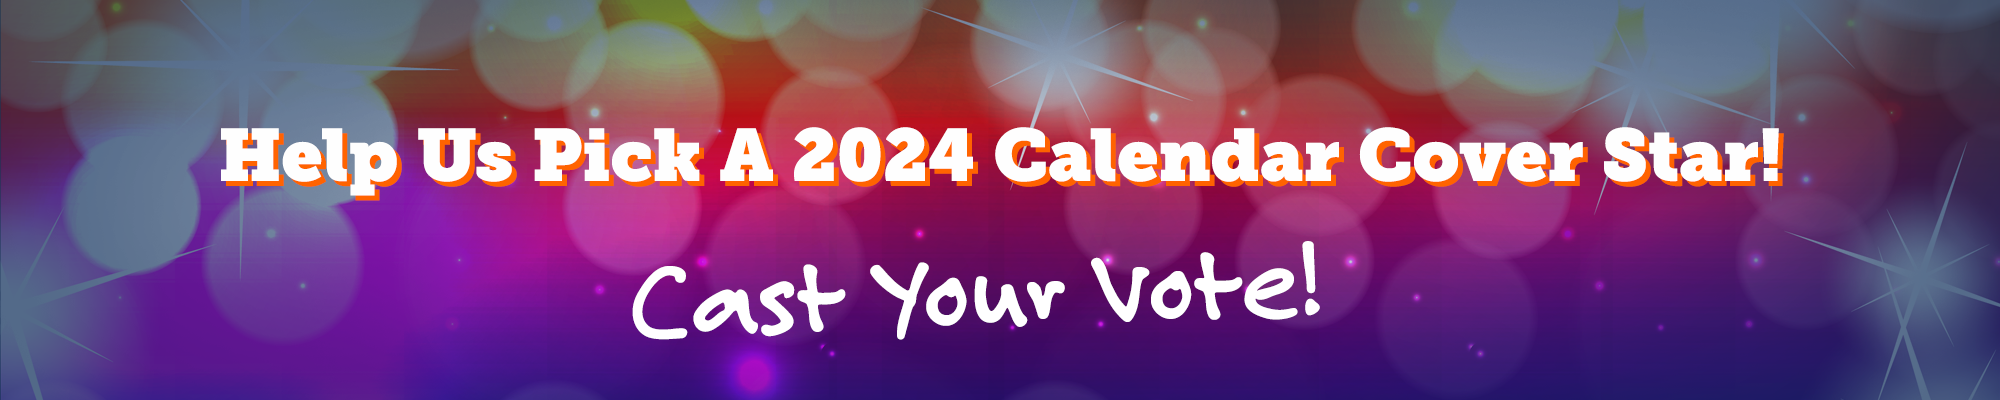 Help Us Pick a 2024 Calendar Cover Star! | ASPCA